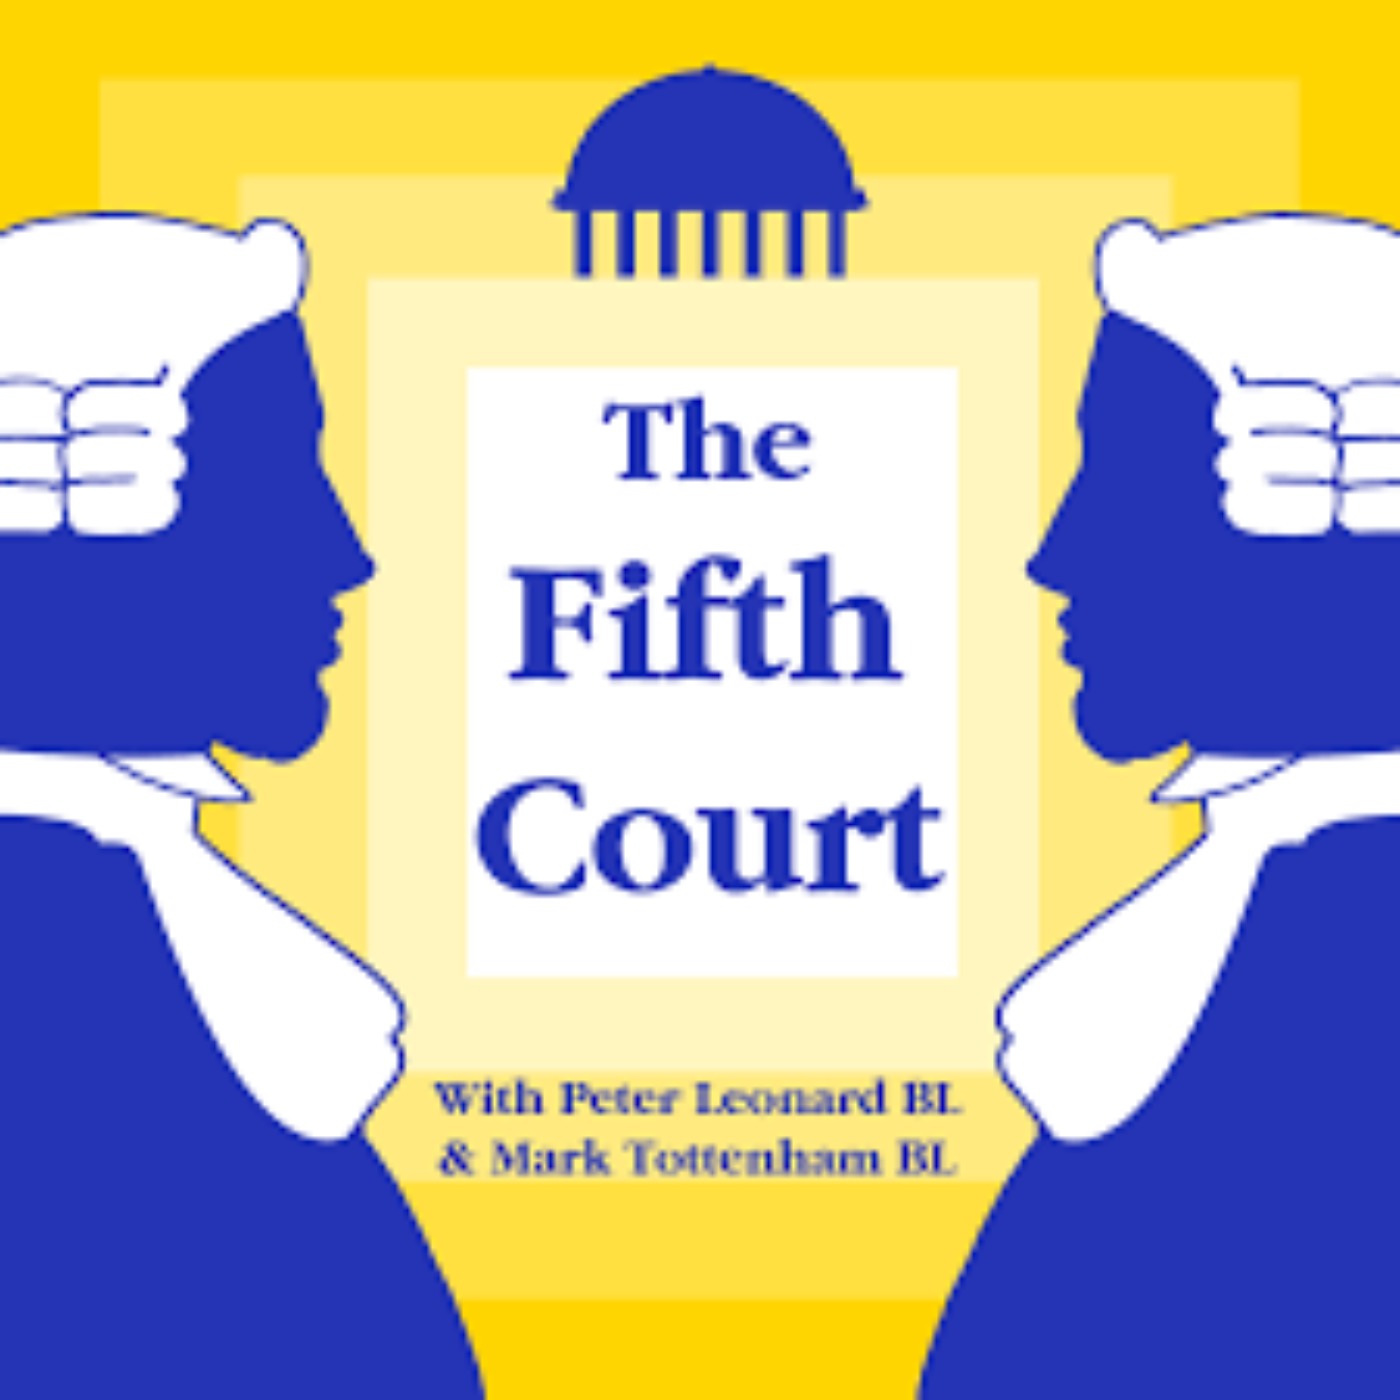 E54 The Fifth Court - The Devils' Episode - Sarah Reid BL, Aran Grealish BL